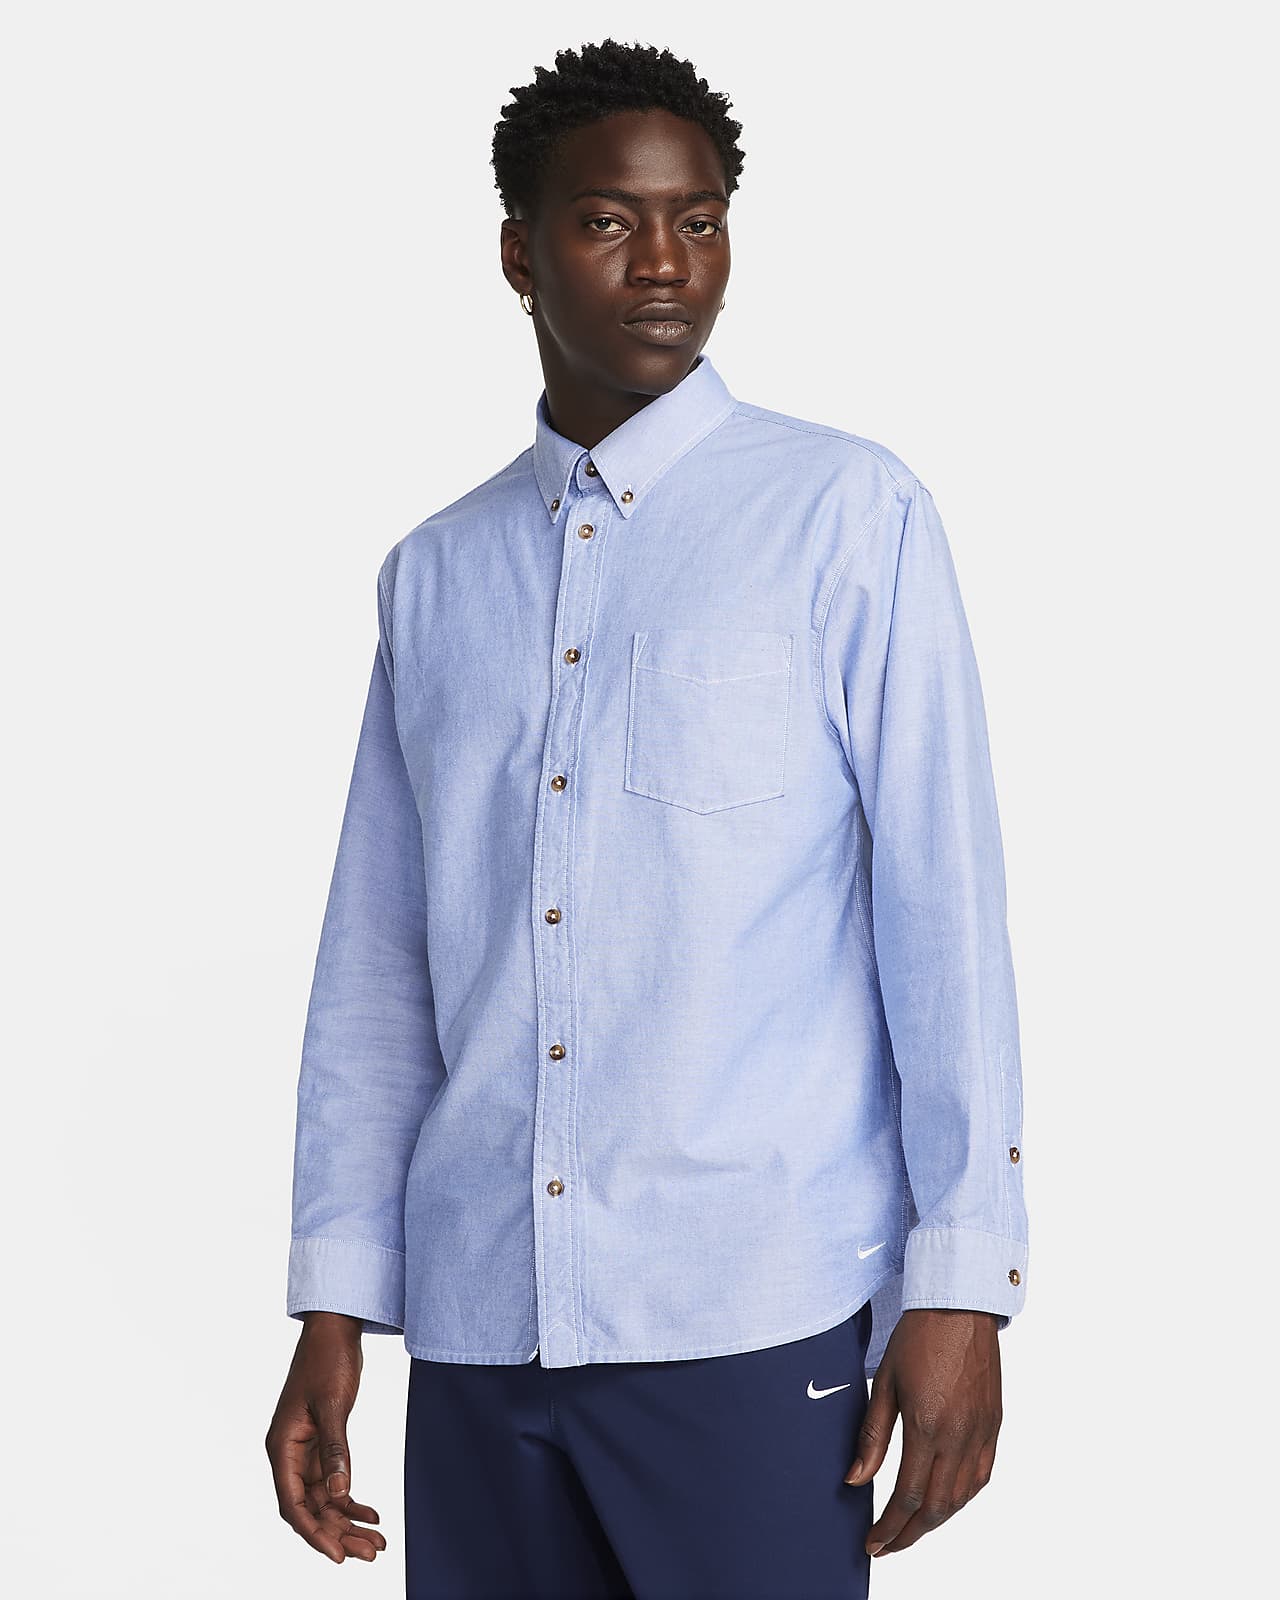 Men's 100% Cotton Long Sleeve Button Down Shirts